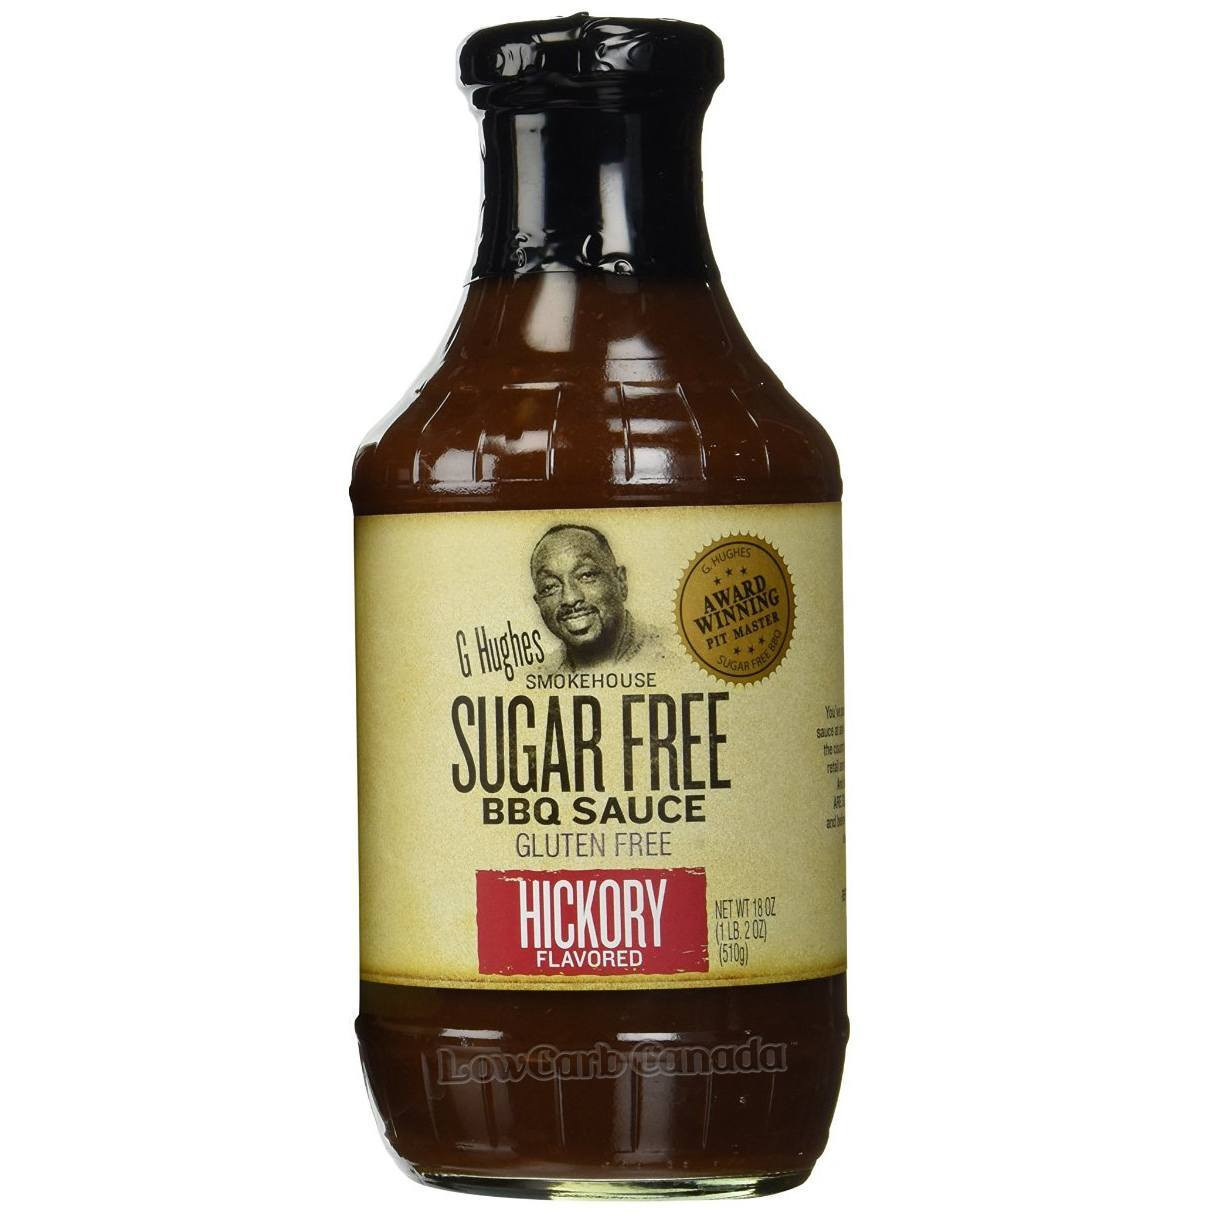 Low Sugar Bbq Sauce
 G Hughes Smokehouse Sugar Free BBQ Sauce Hickory 18